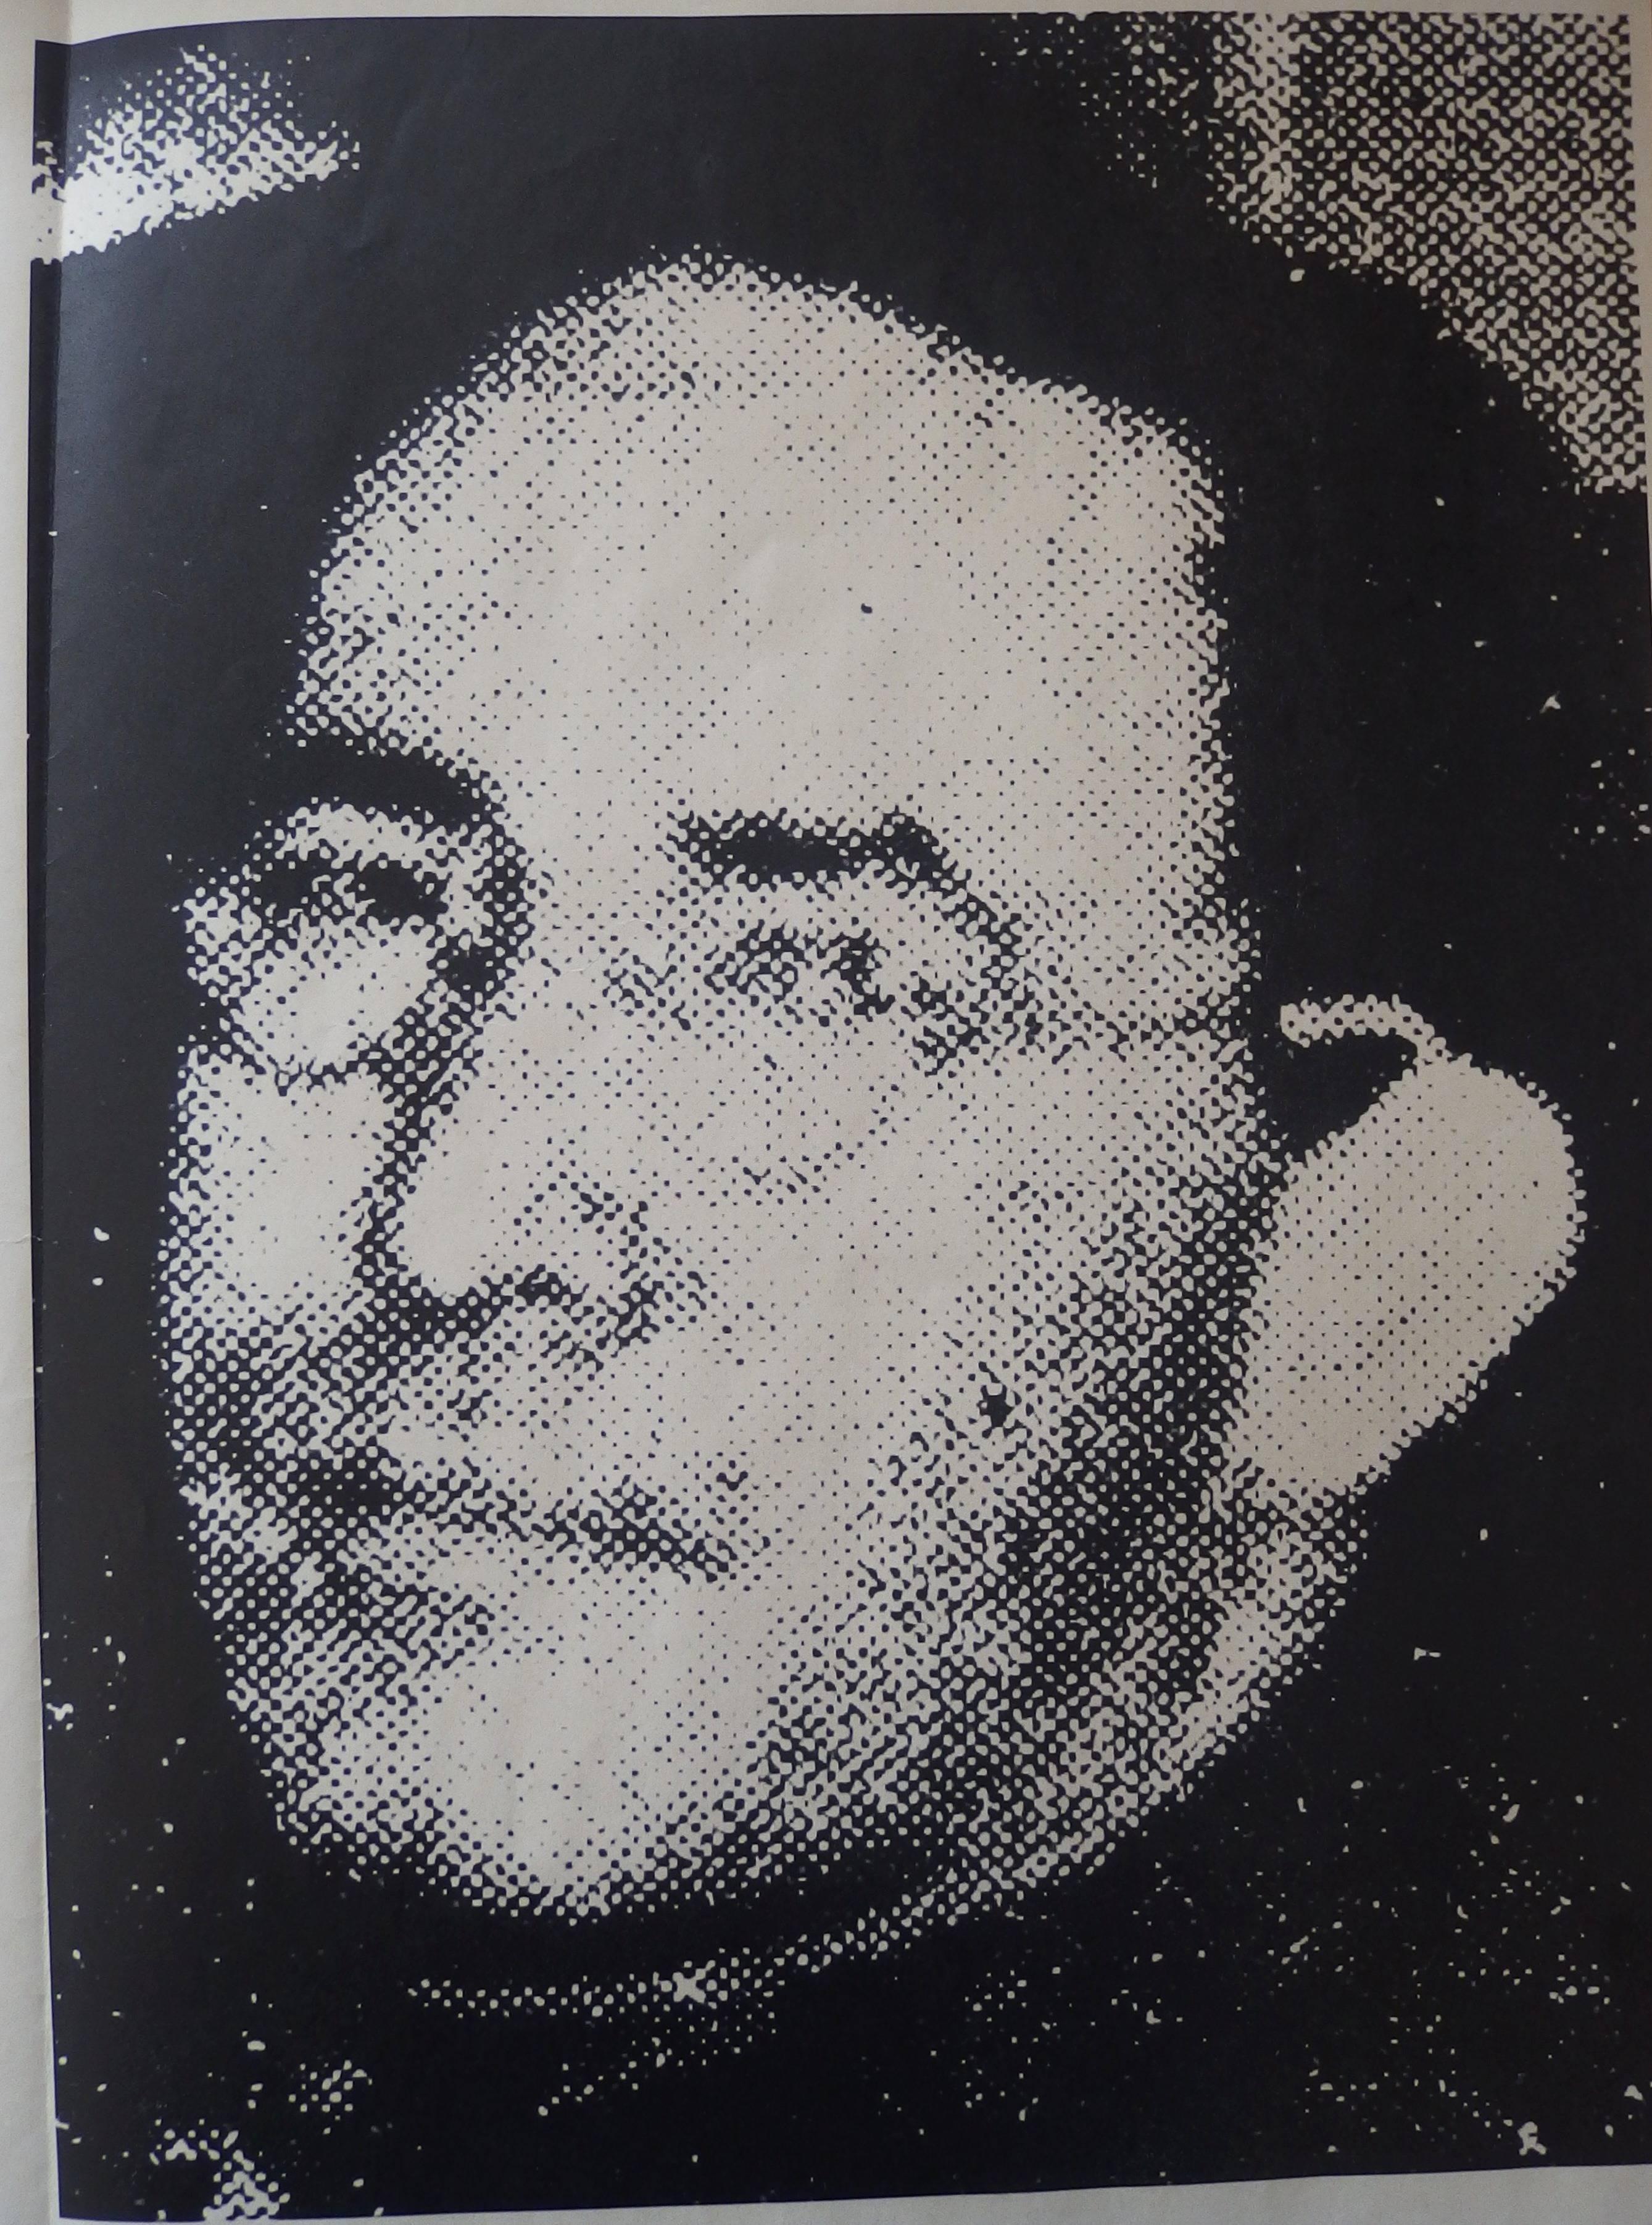 Andy WARHOL - The thirteen most wanted, orginal  screen print - Print by Andy Warhol